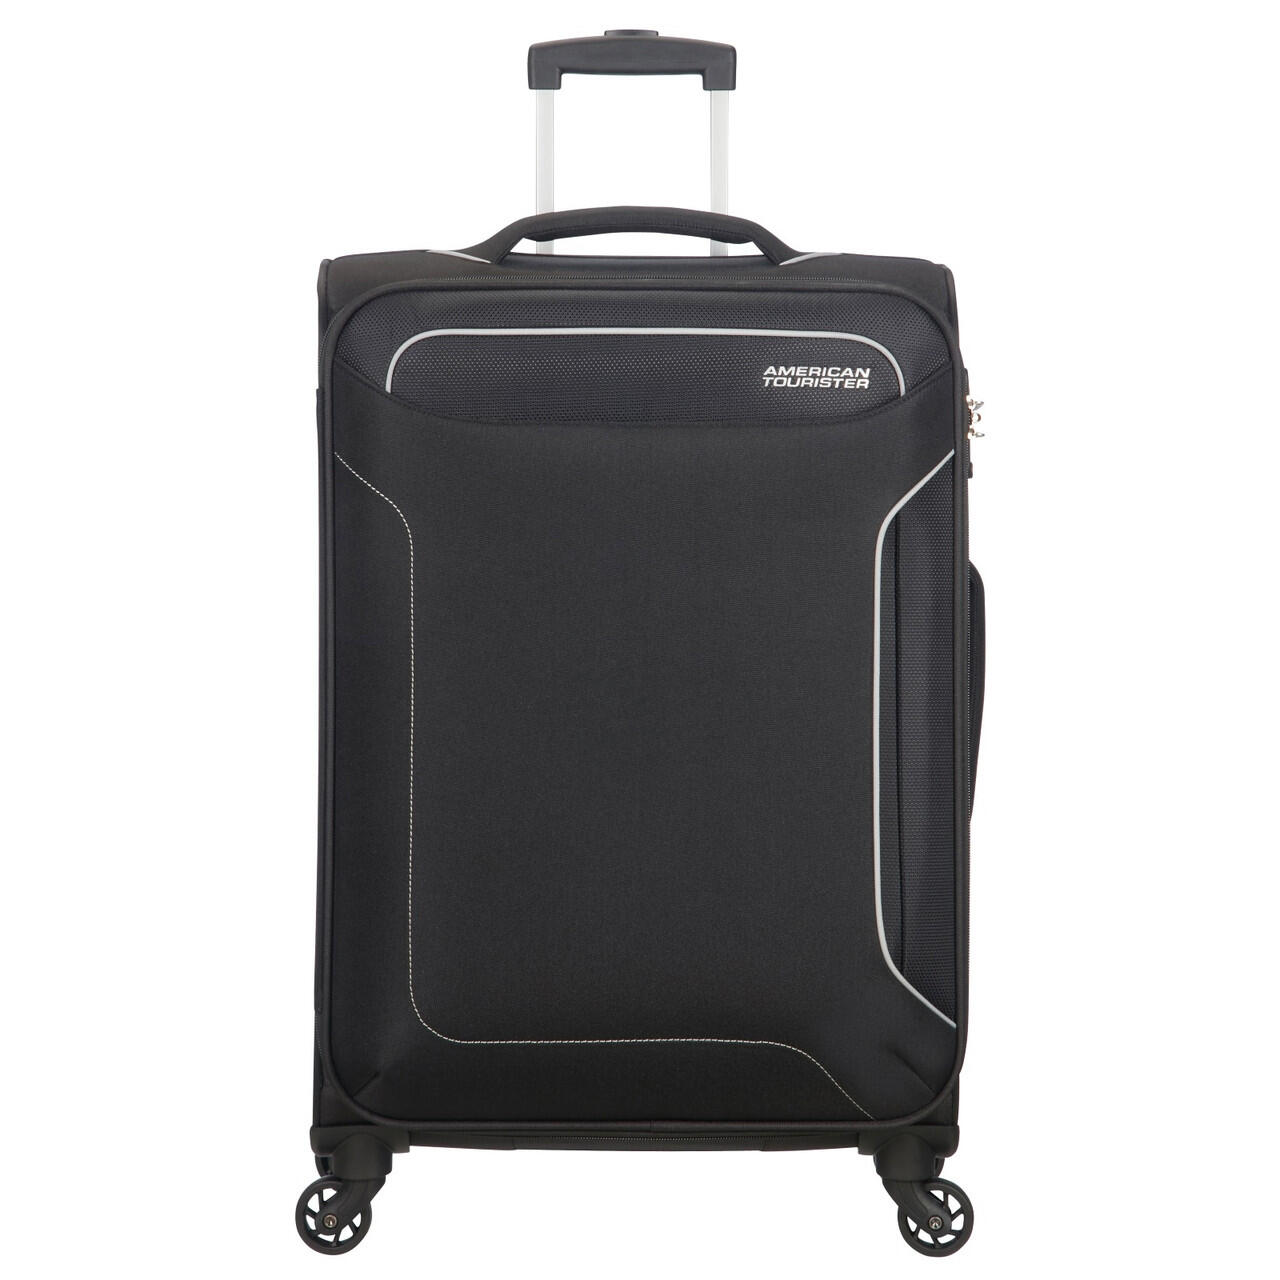 AMERICAN TOURISTER Holiday Heat 4 Wheel Suitcase - 67cm - Black